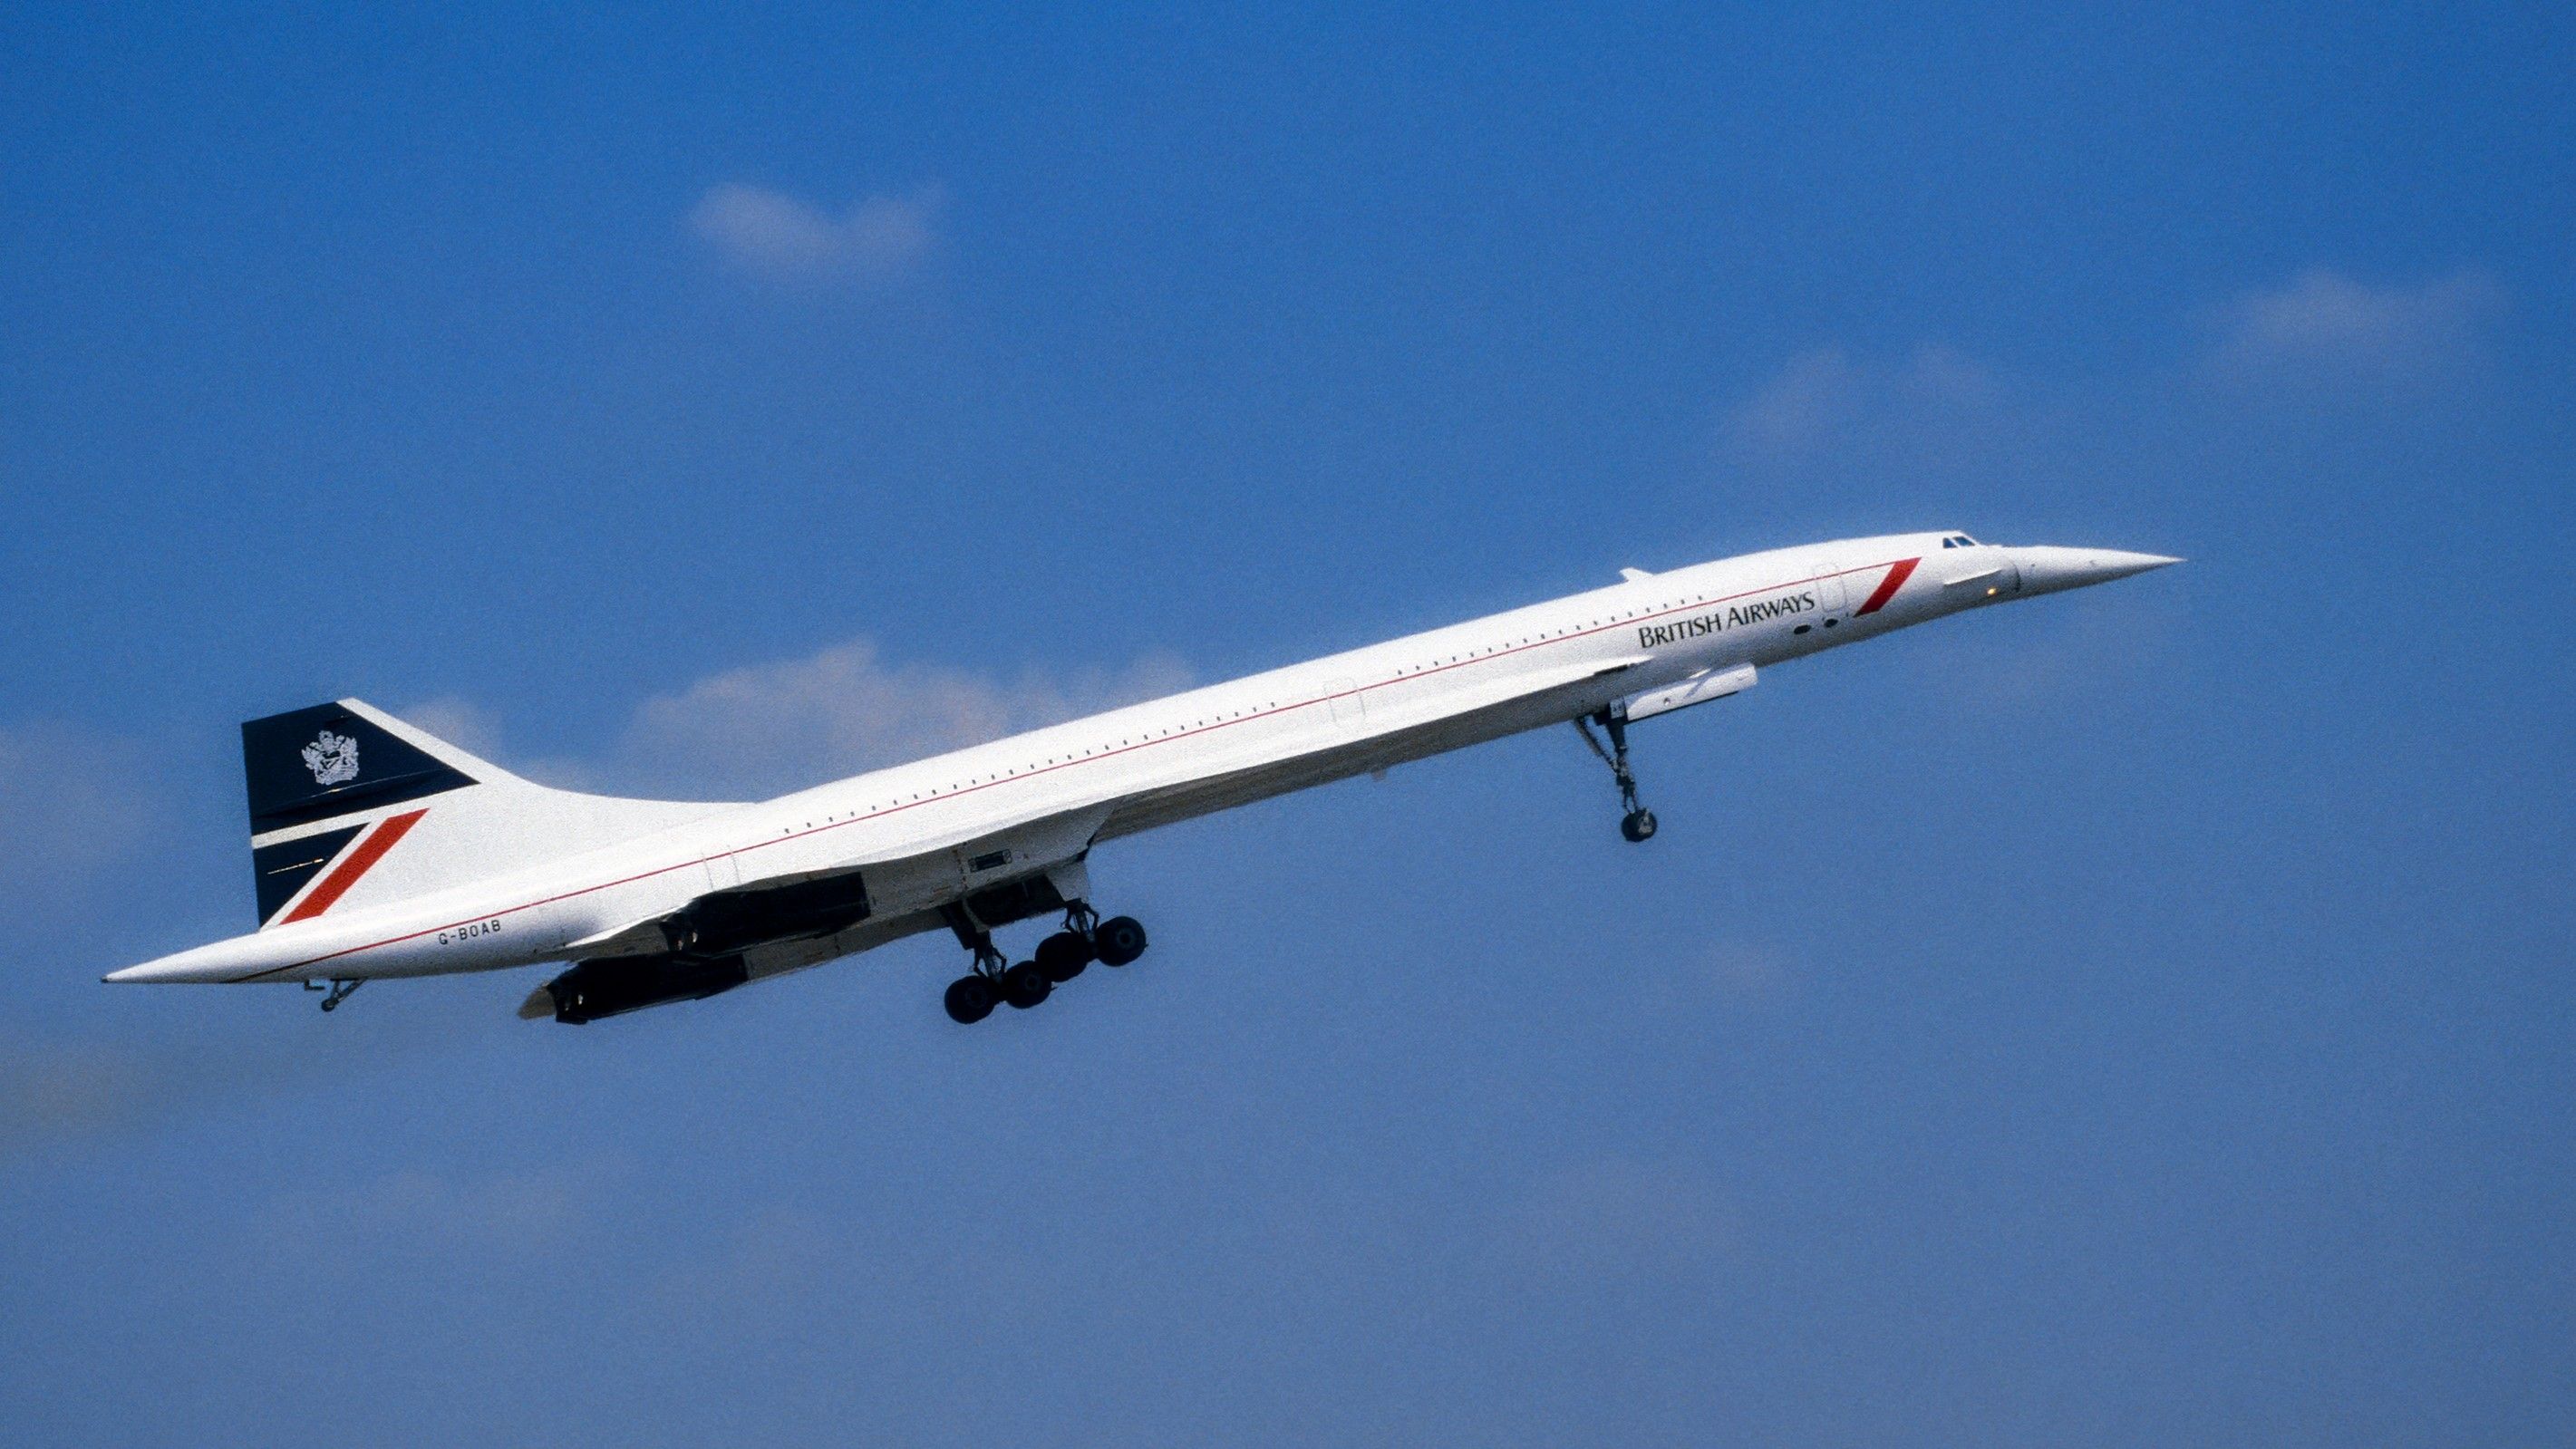 BA Concorde taking off